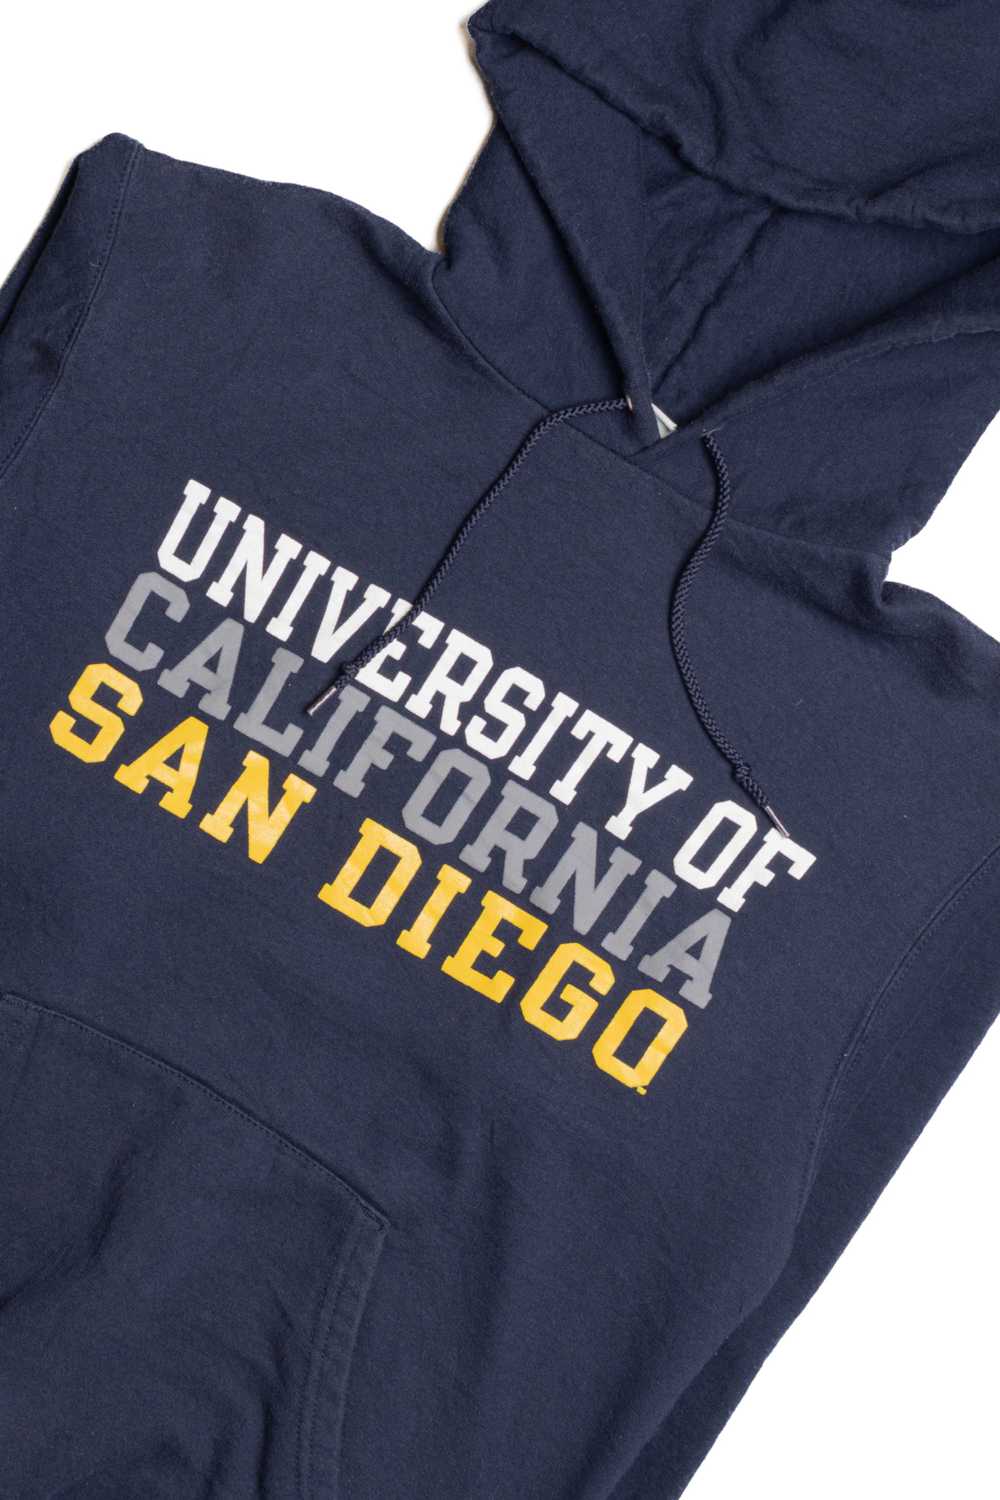 University of California San Diego Hoodie - image 2